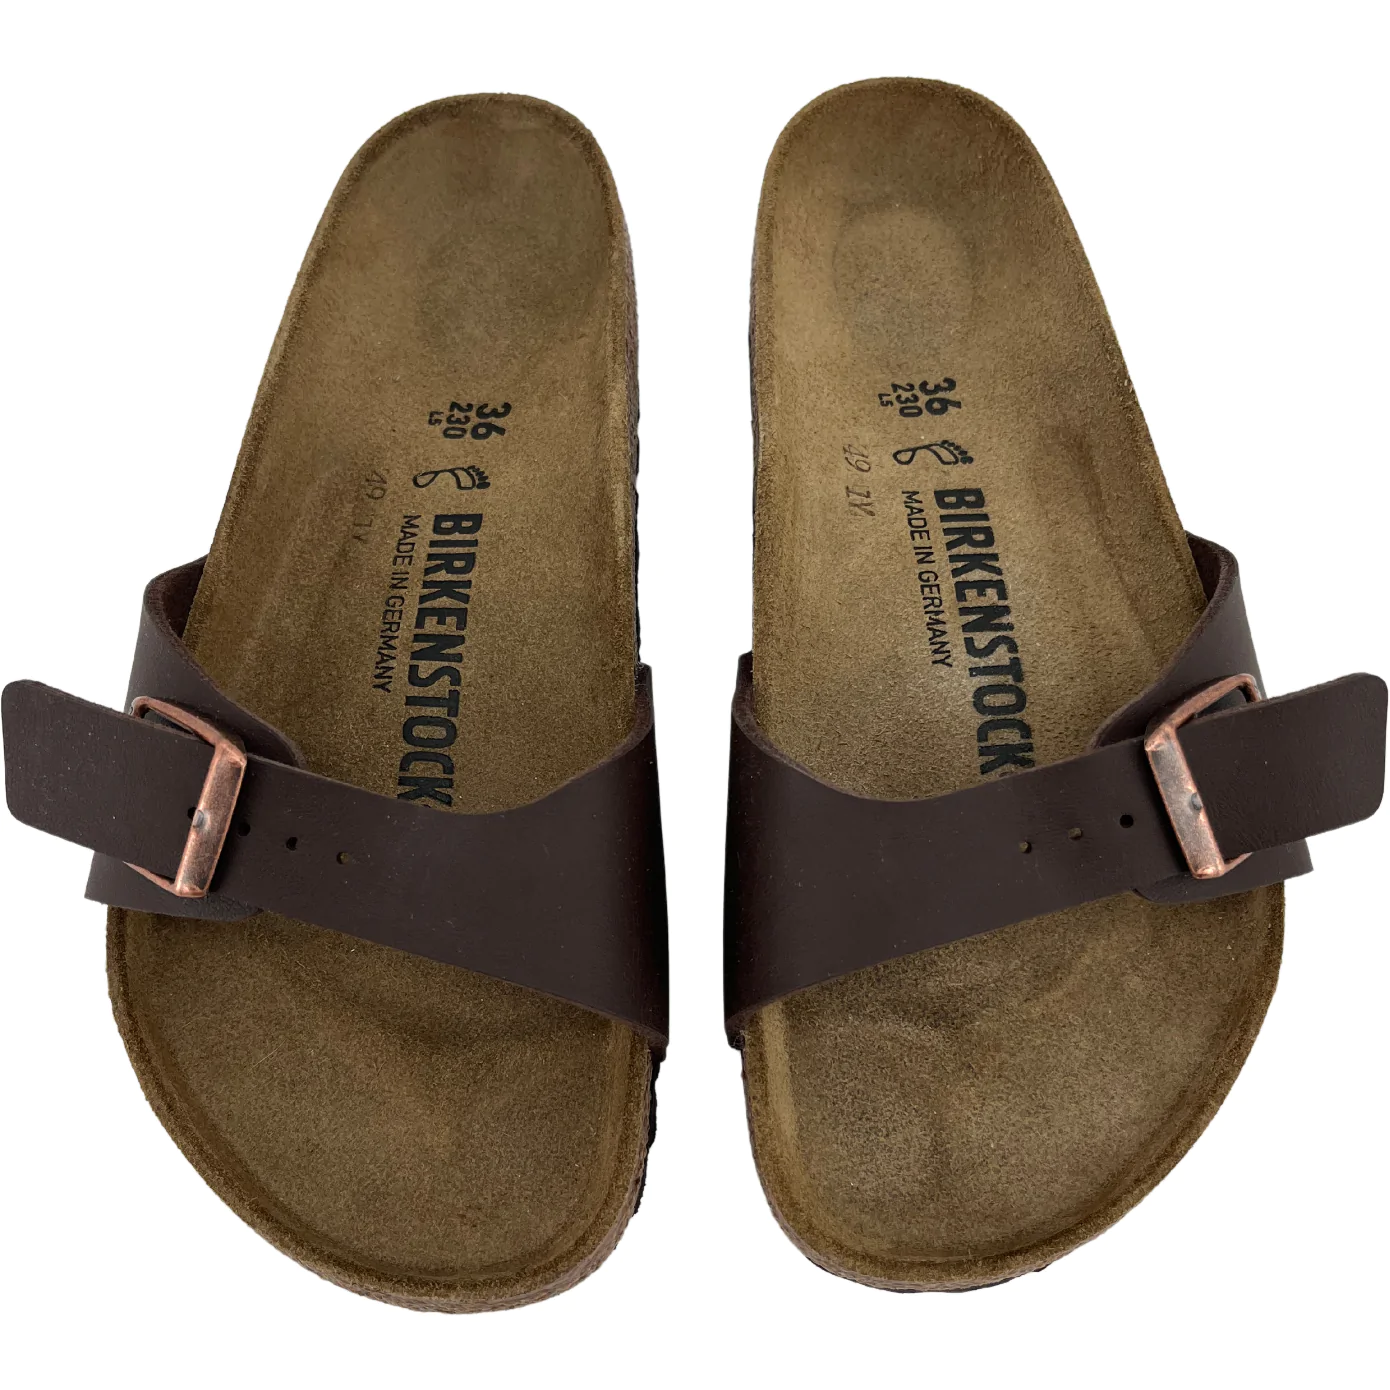 Birkenstock Women's Sandals / Madrid BS Sandals / Dark Brown / Size 5